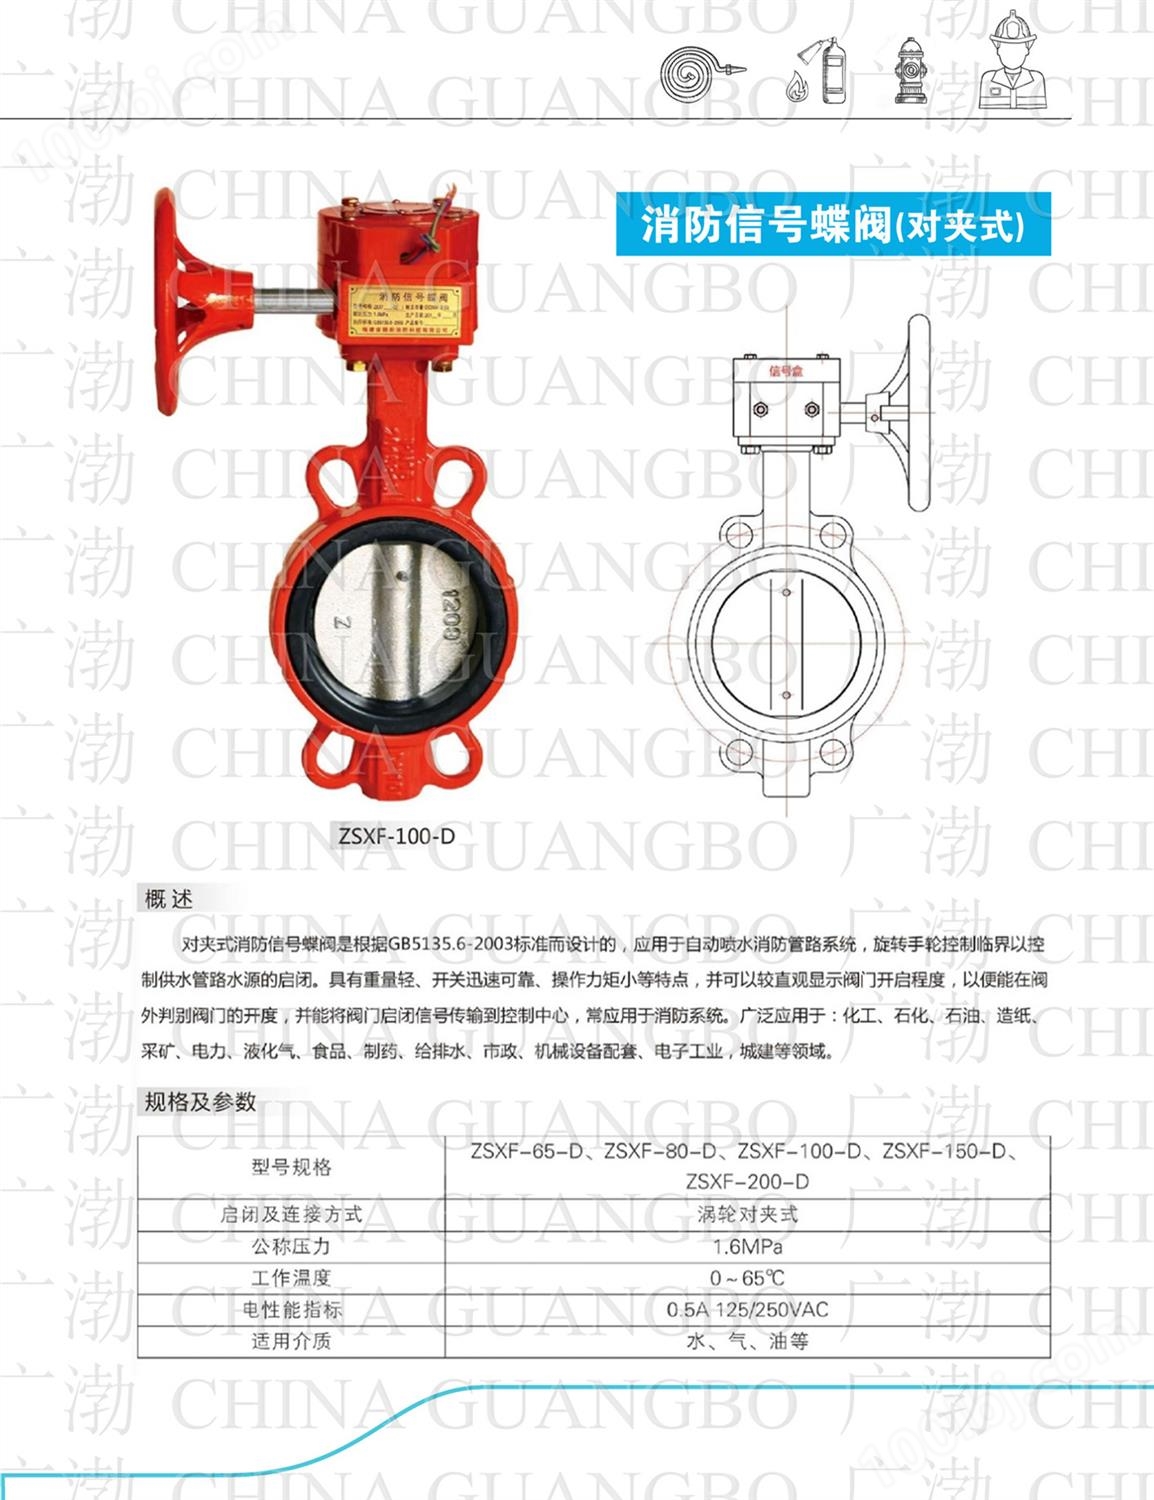 Fujian Guangbo Fire Fighting Protection Sprinkler Hydrant Valve Hose Reel Extinguisher Box Cabin.jpg